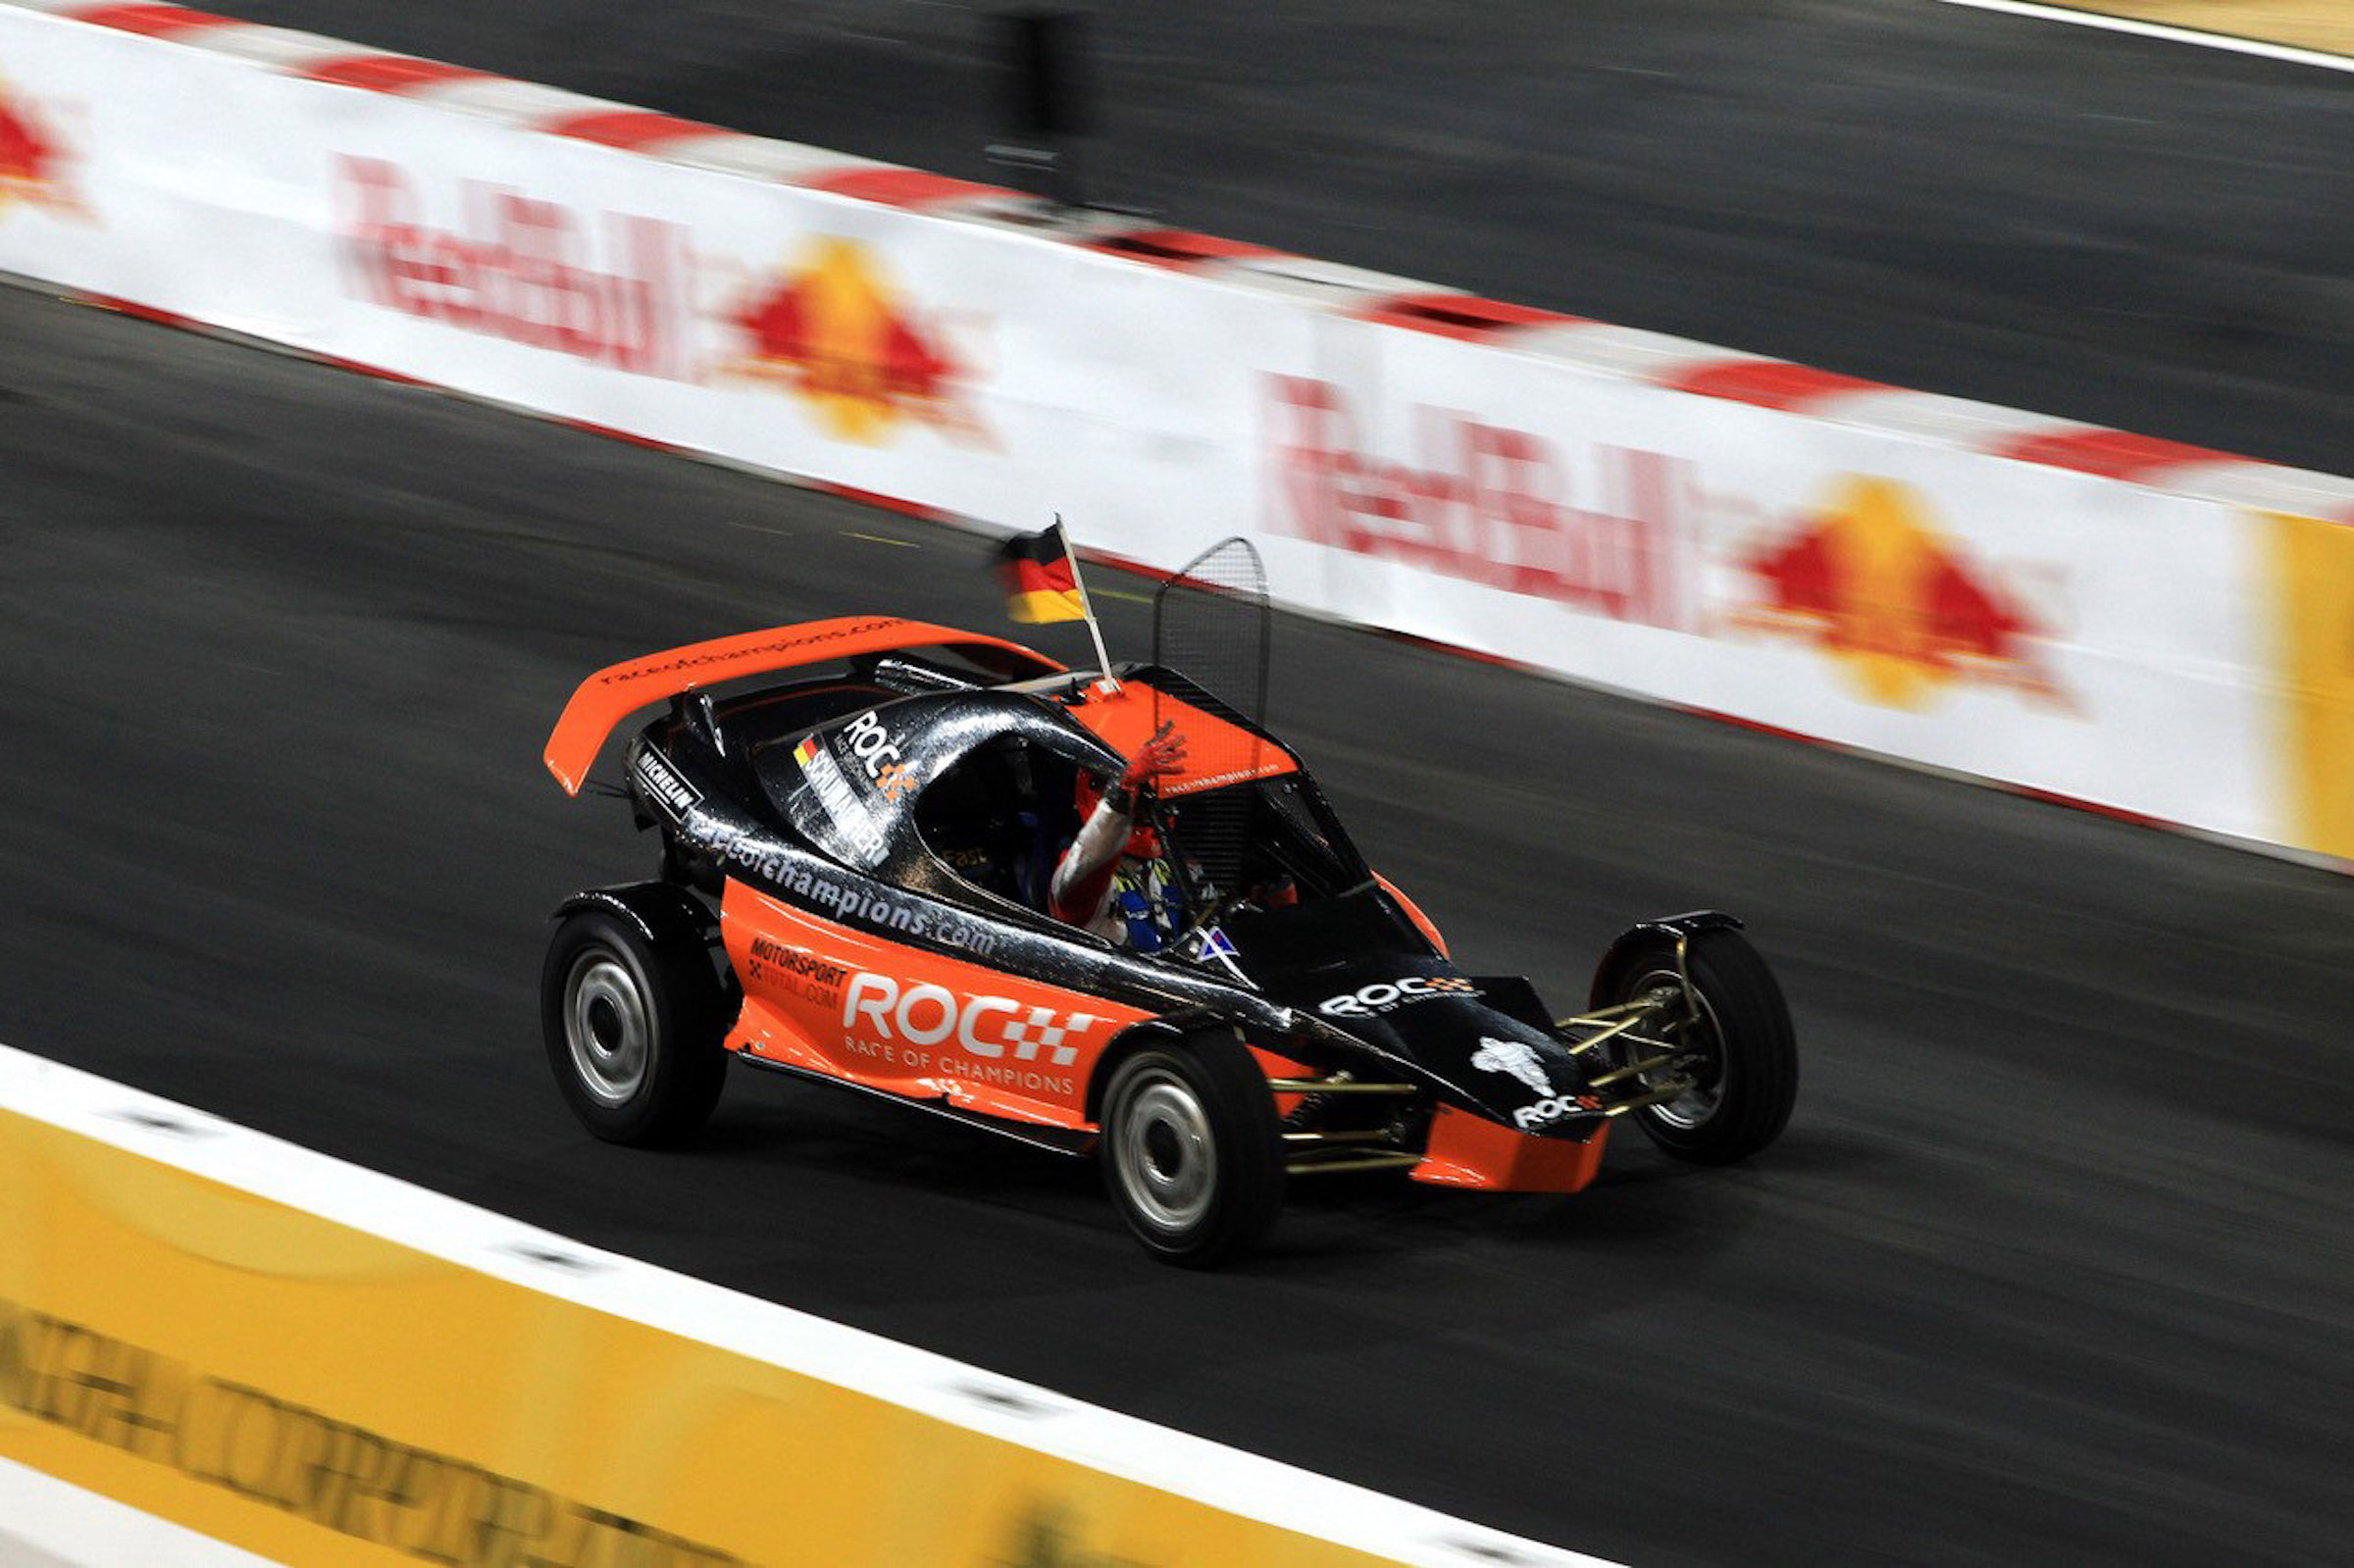 Race of Champions (ROC): ROC car, Buggy, Michael Schumacher and Sebastian Vettel, The 2012 event, German team. 2400x1600 HD Wallpaper.